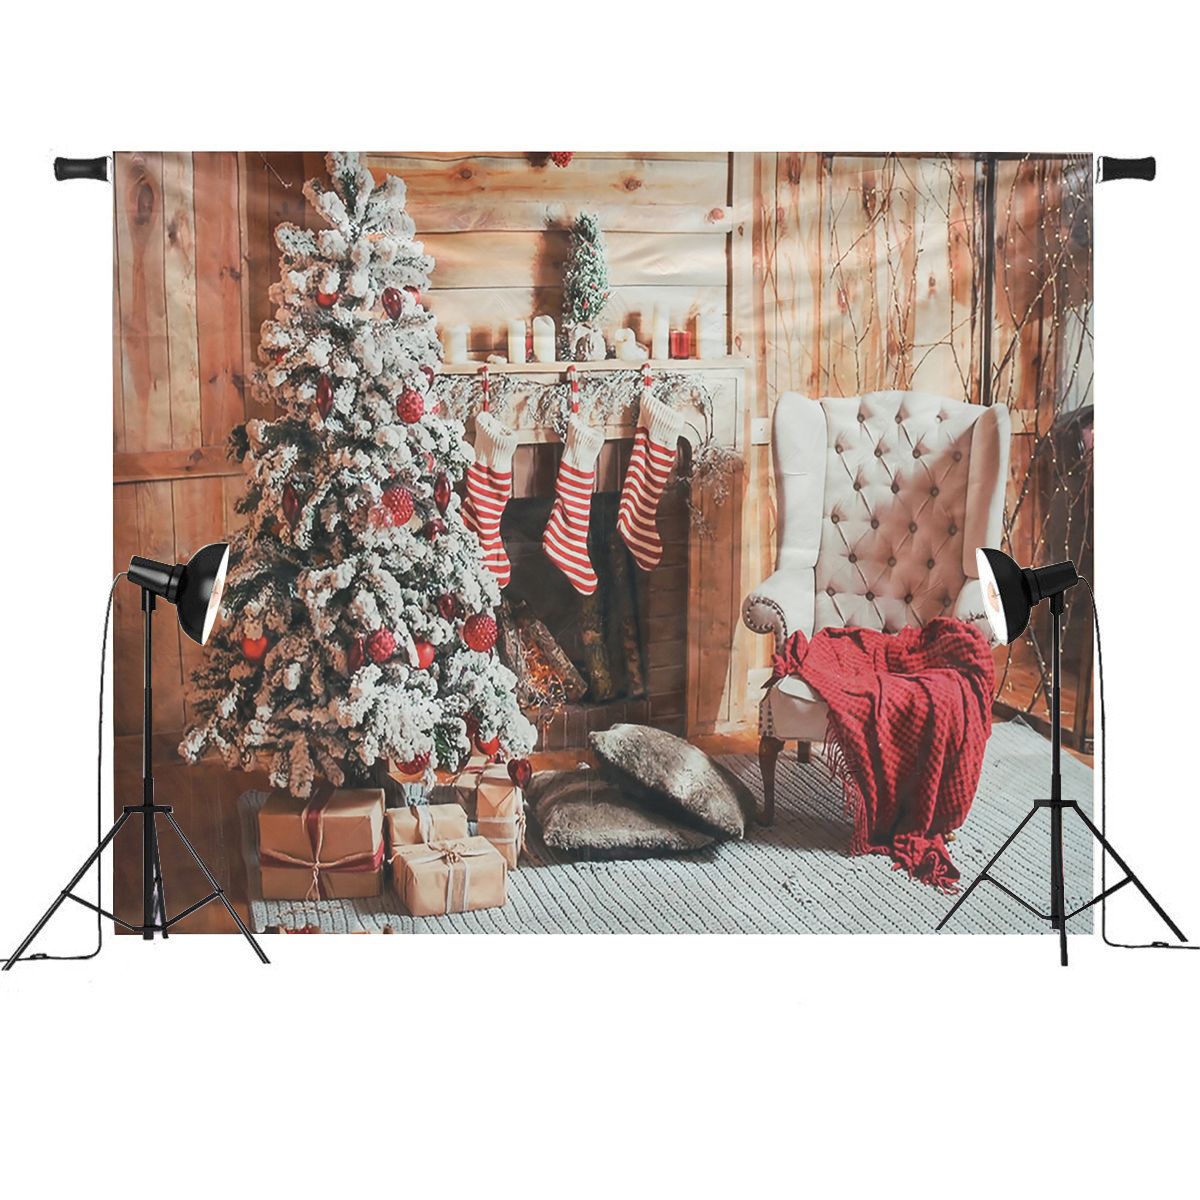 7x5ft-Christmas-Fireplace-Christmas-Tree-Chair-Gift-Stockings-Photography-Backdrop-Studio-Prop-Backg-1348885